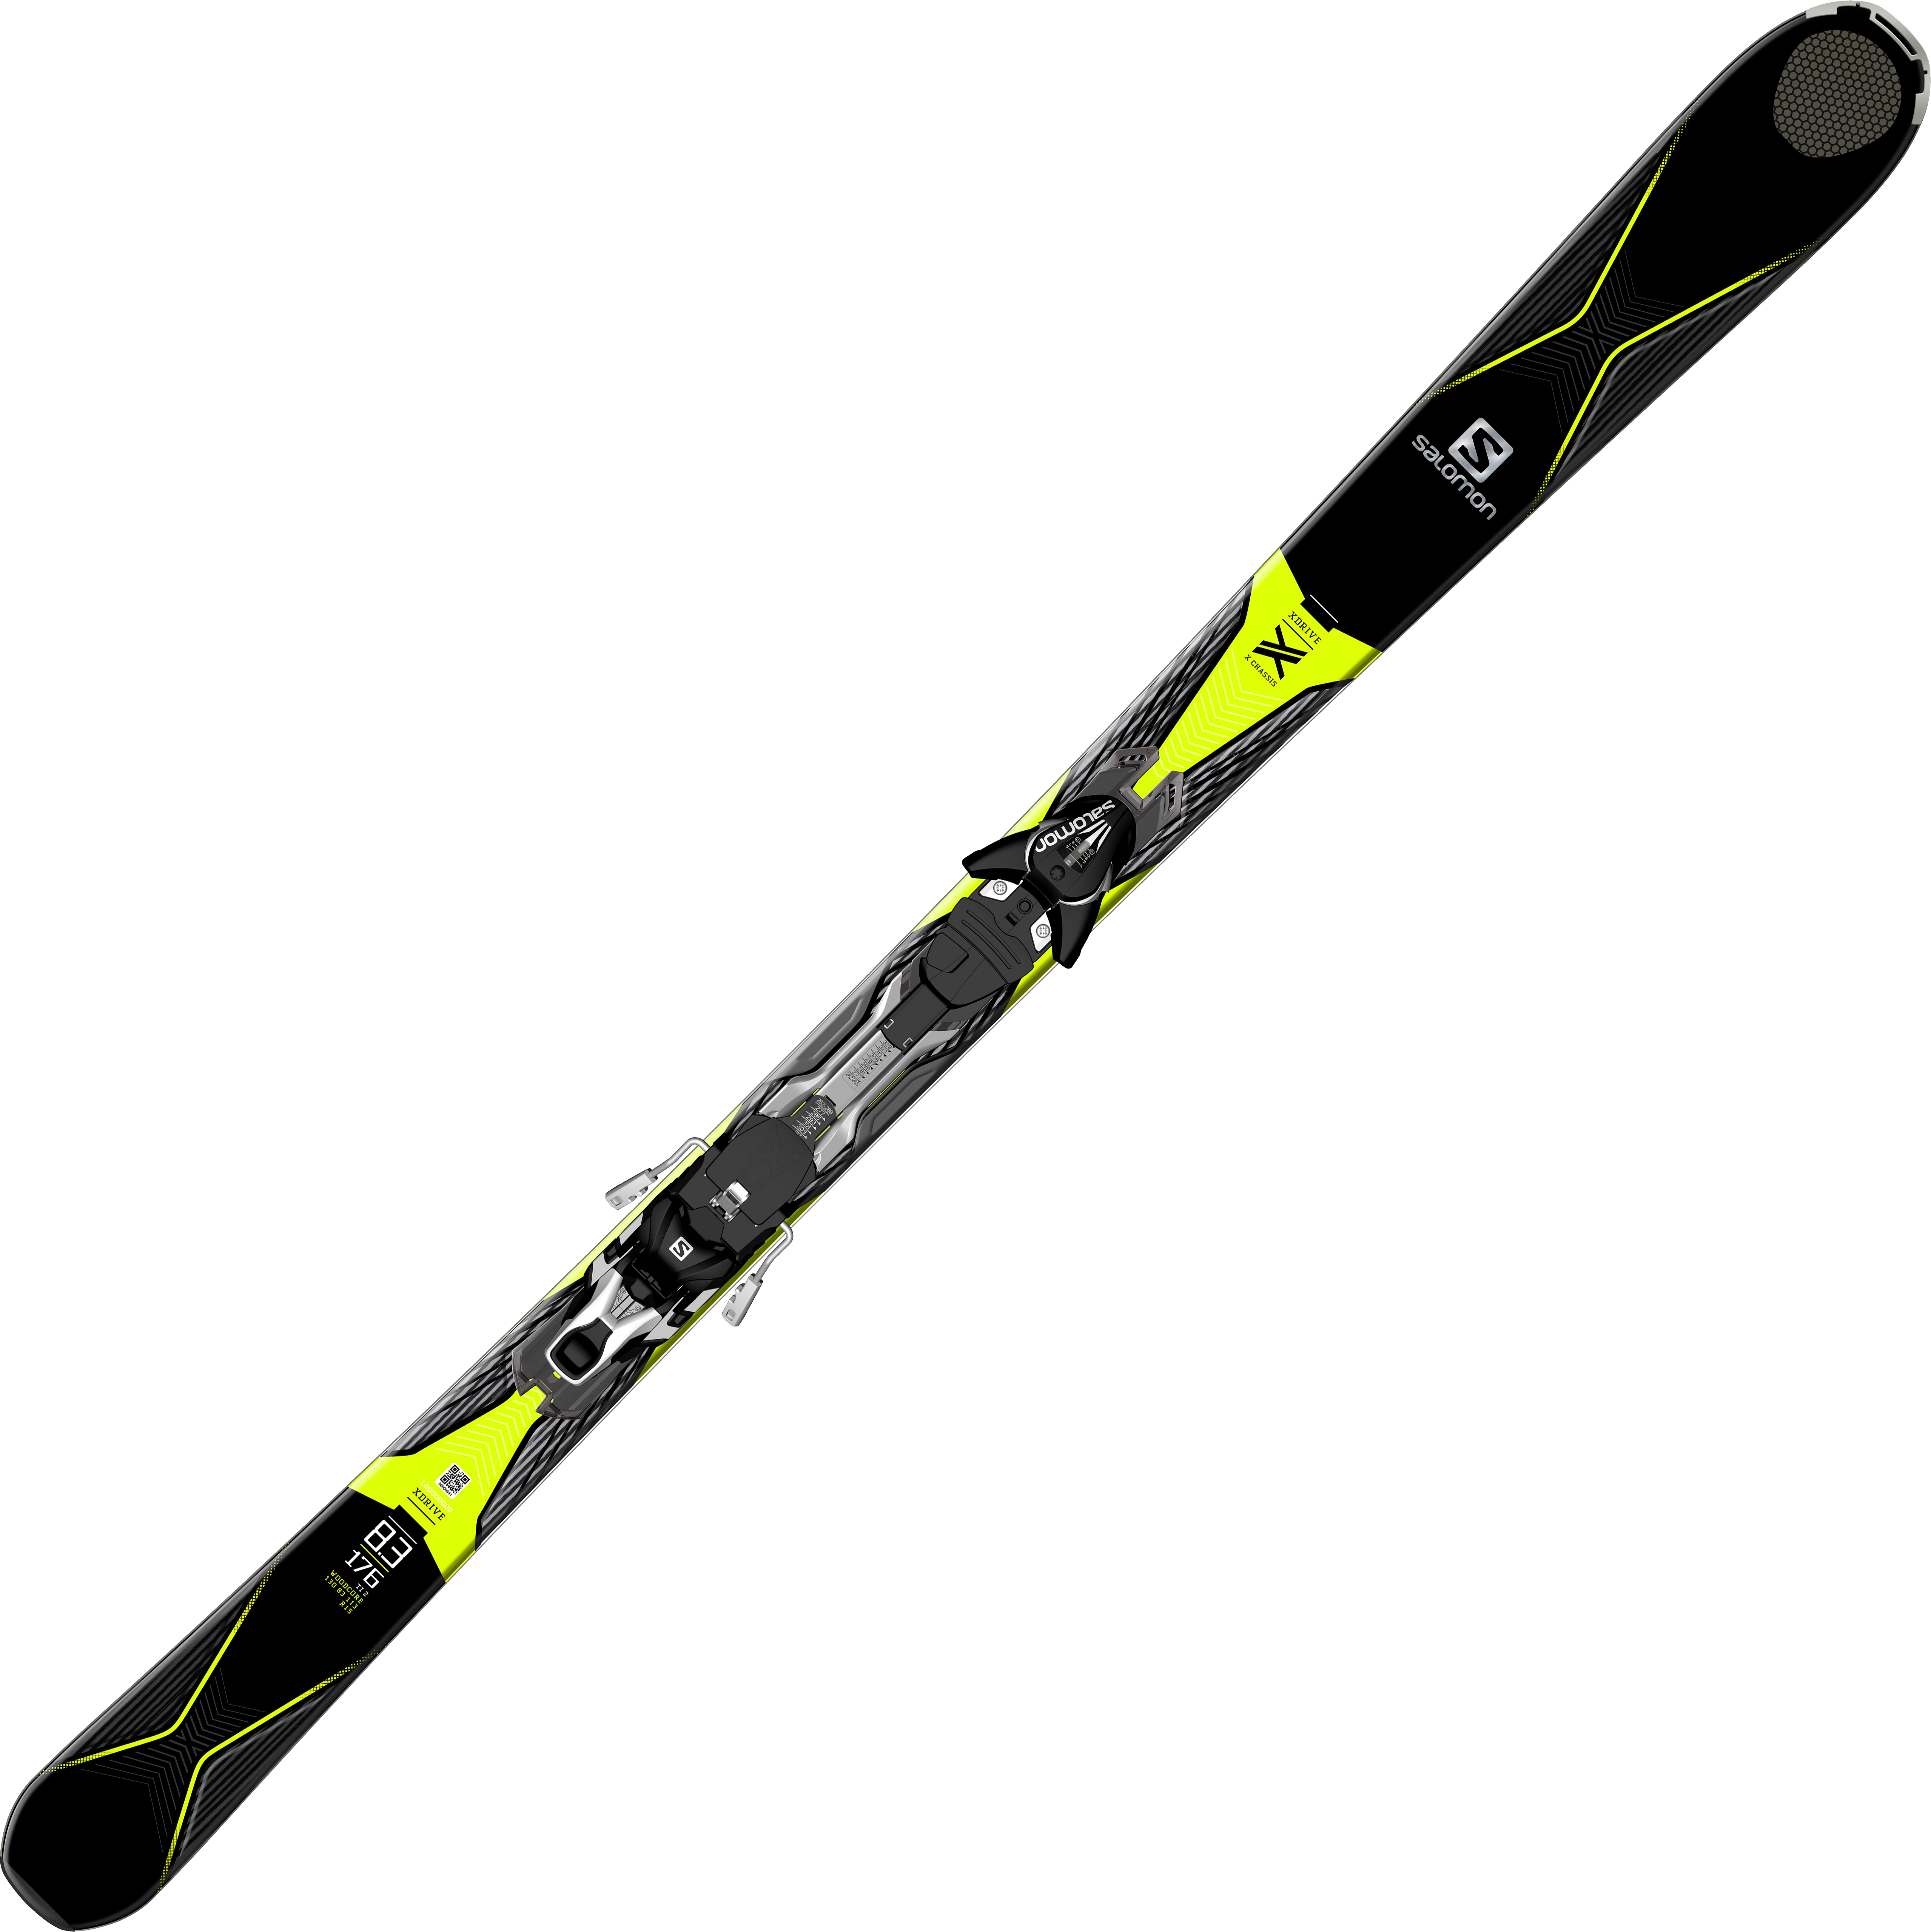 A Black And Yellow Ski